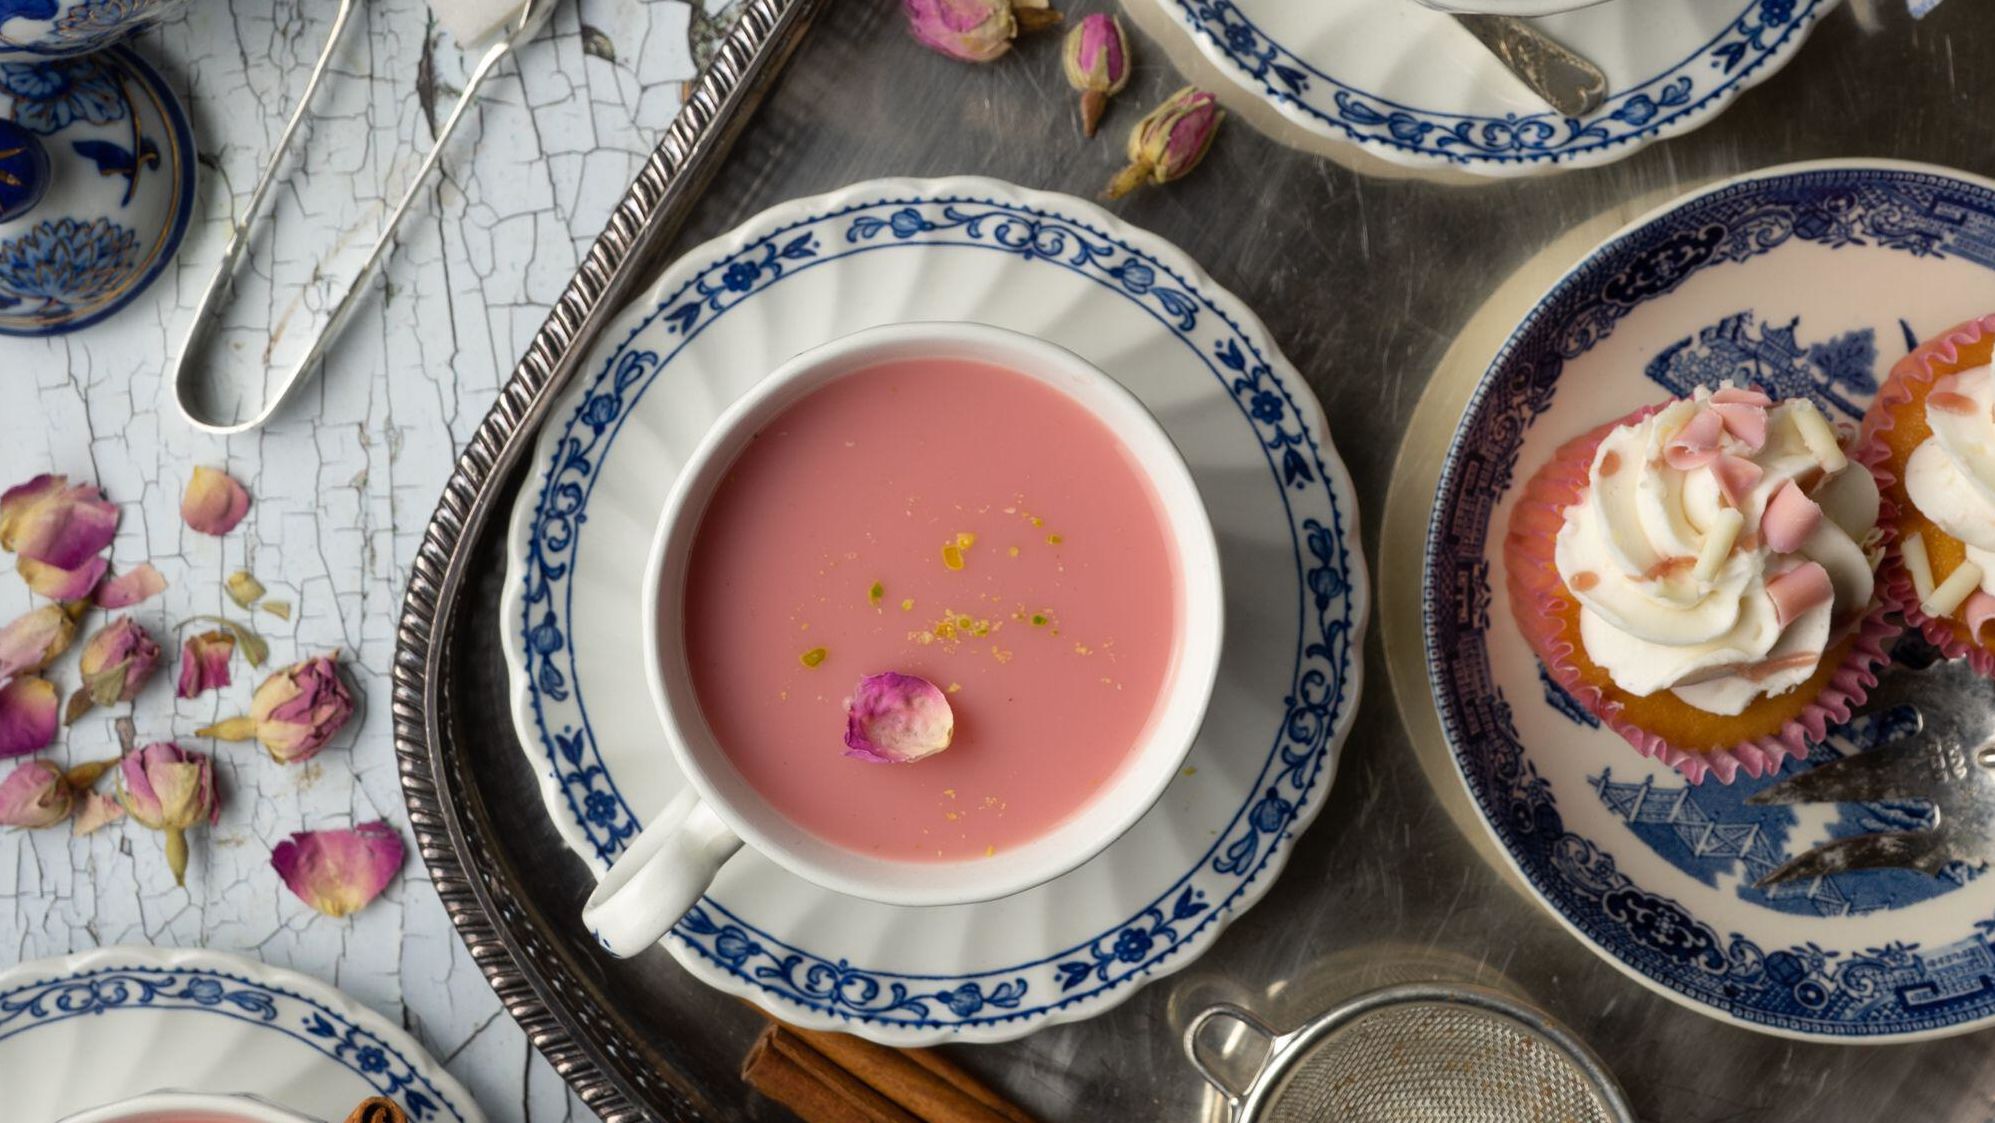 Kashmiri pink chai offers pastel-colored refreshment.